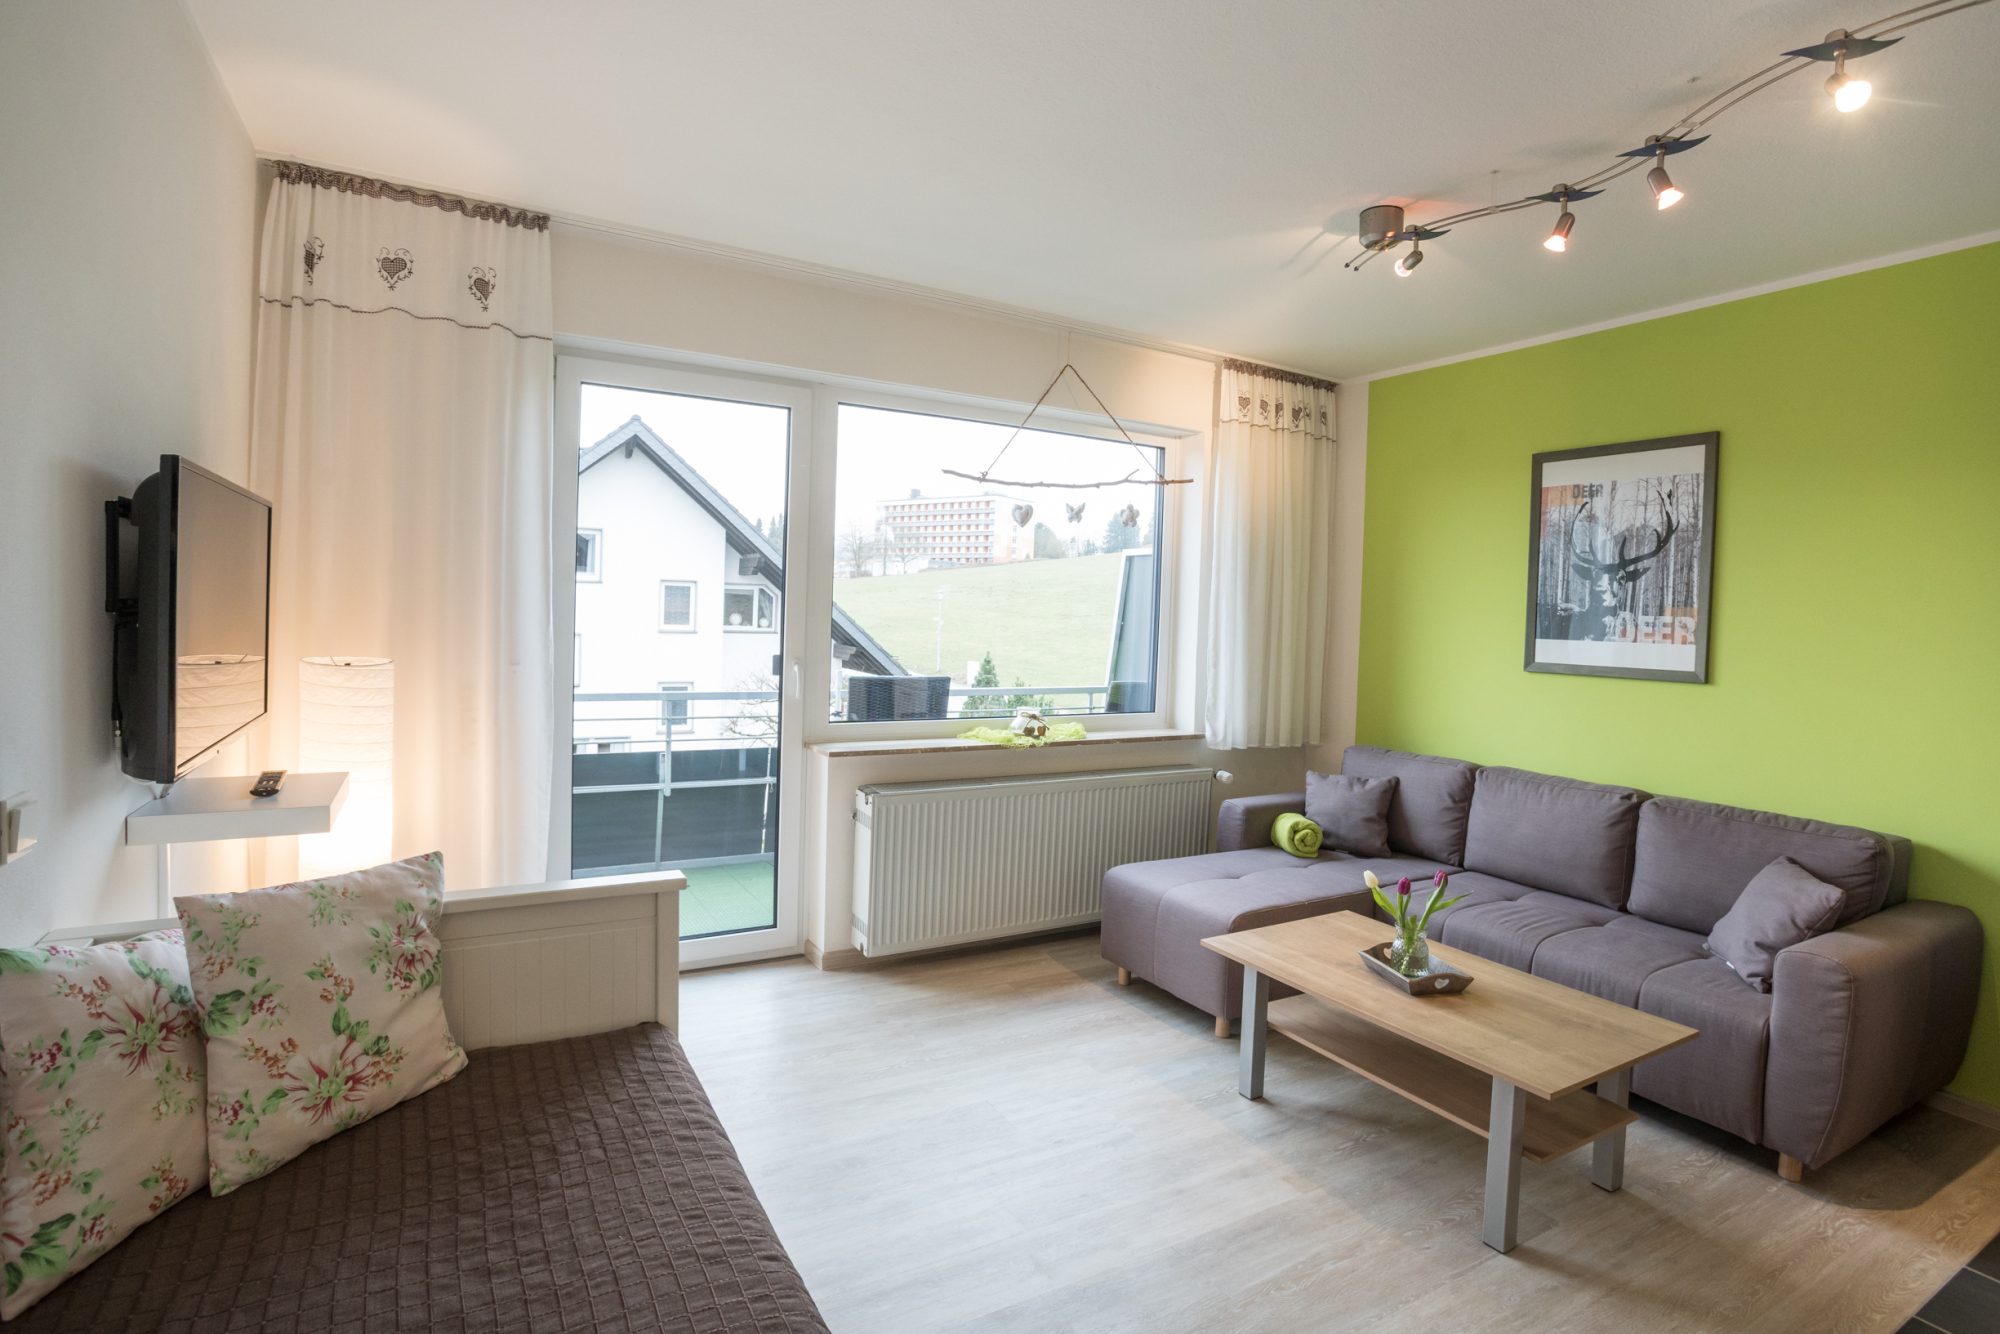 Apartment Comfort L Ettelsberg - Wohnbereich